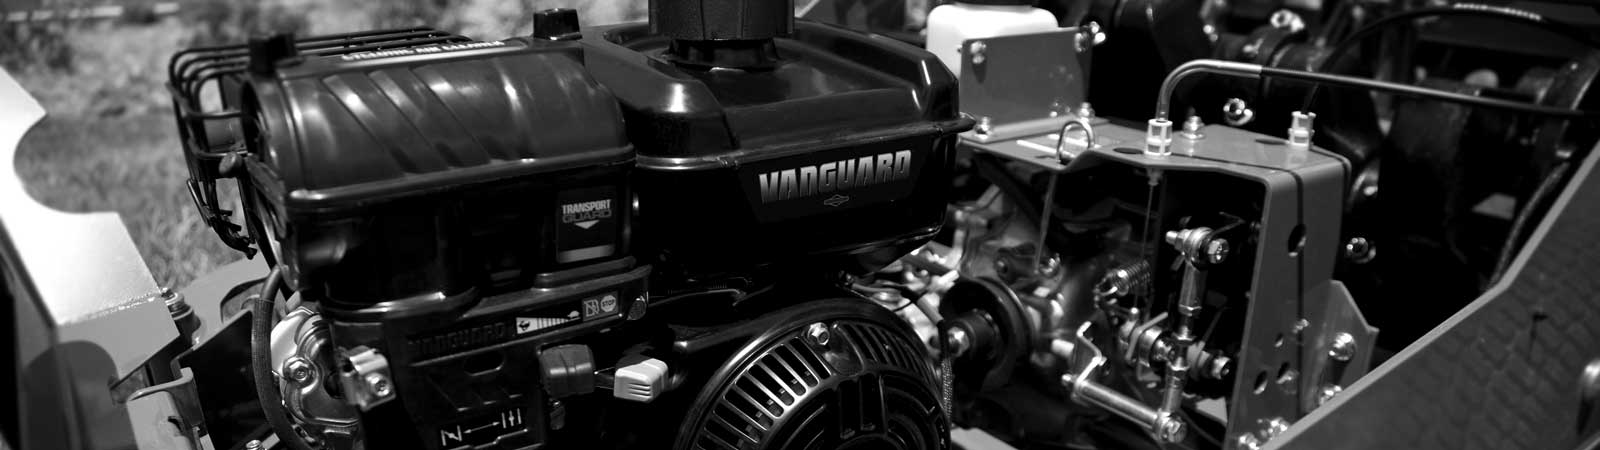 Vanguard 200 single-cylinder engine